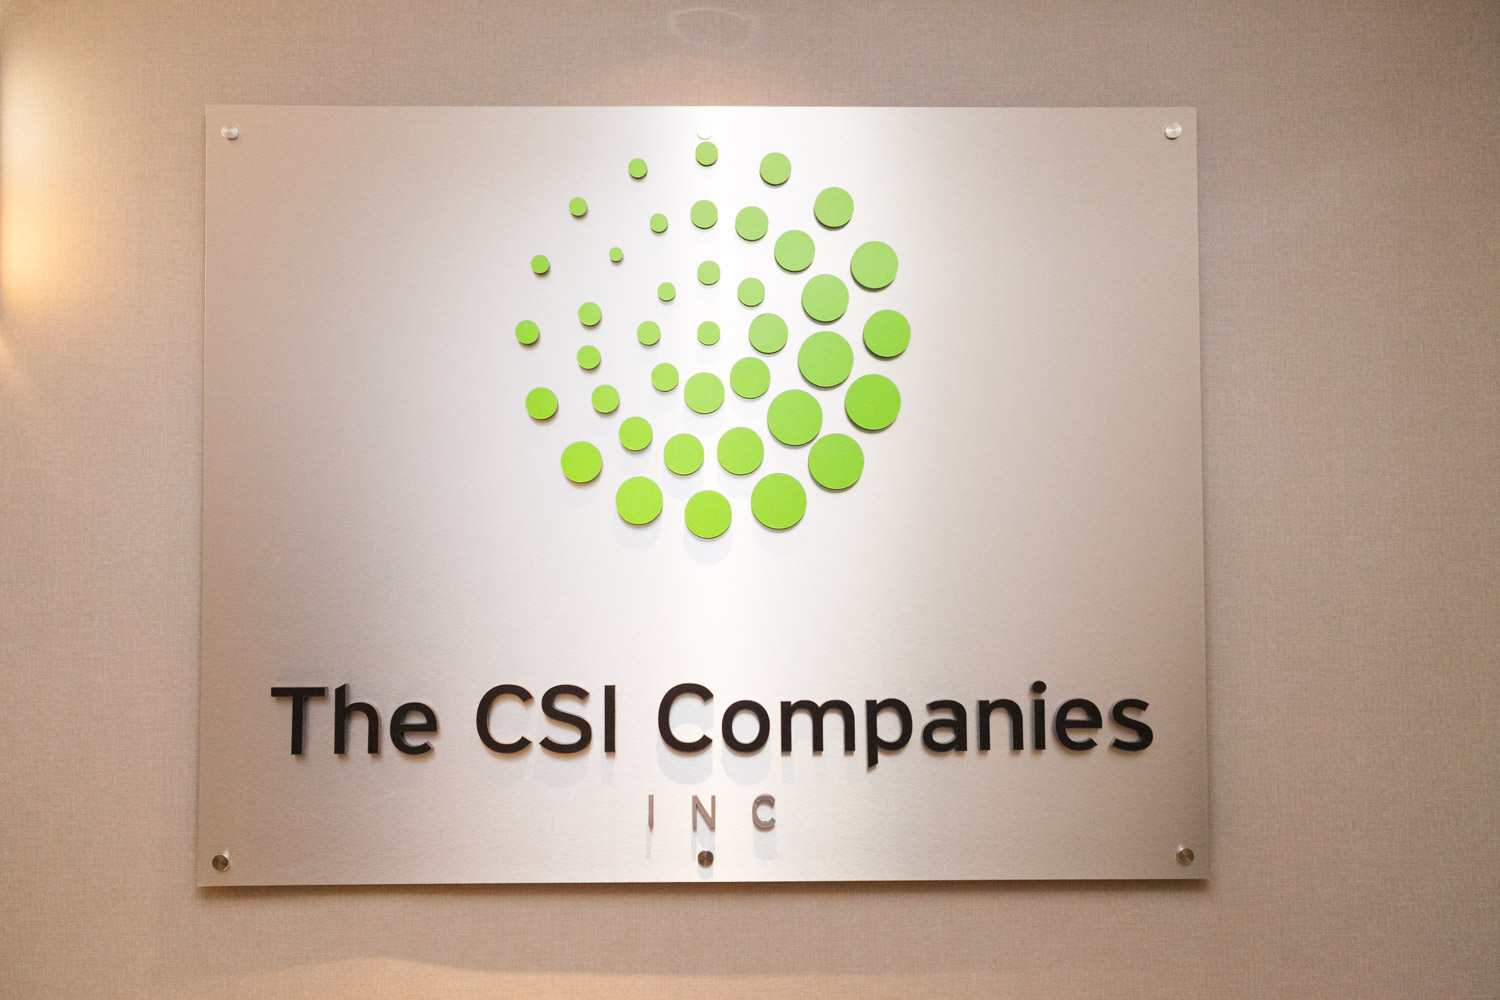 CSI Companies